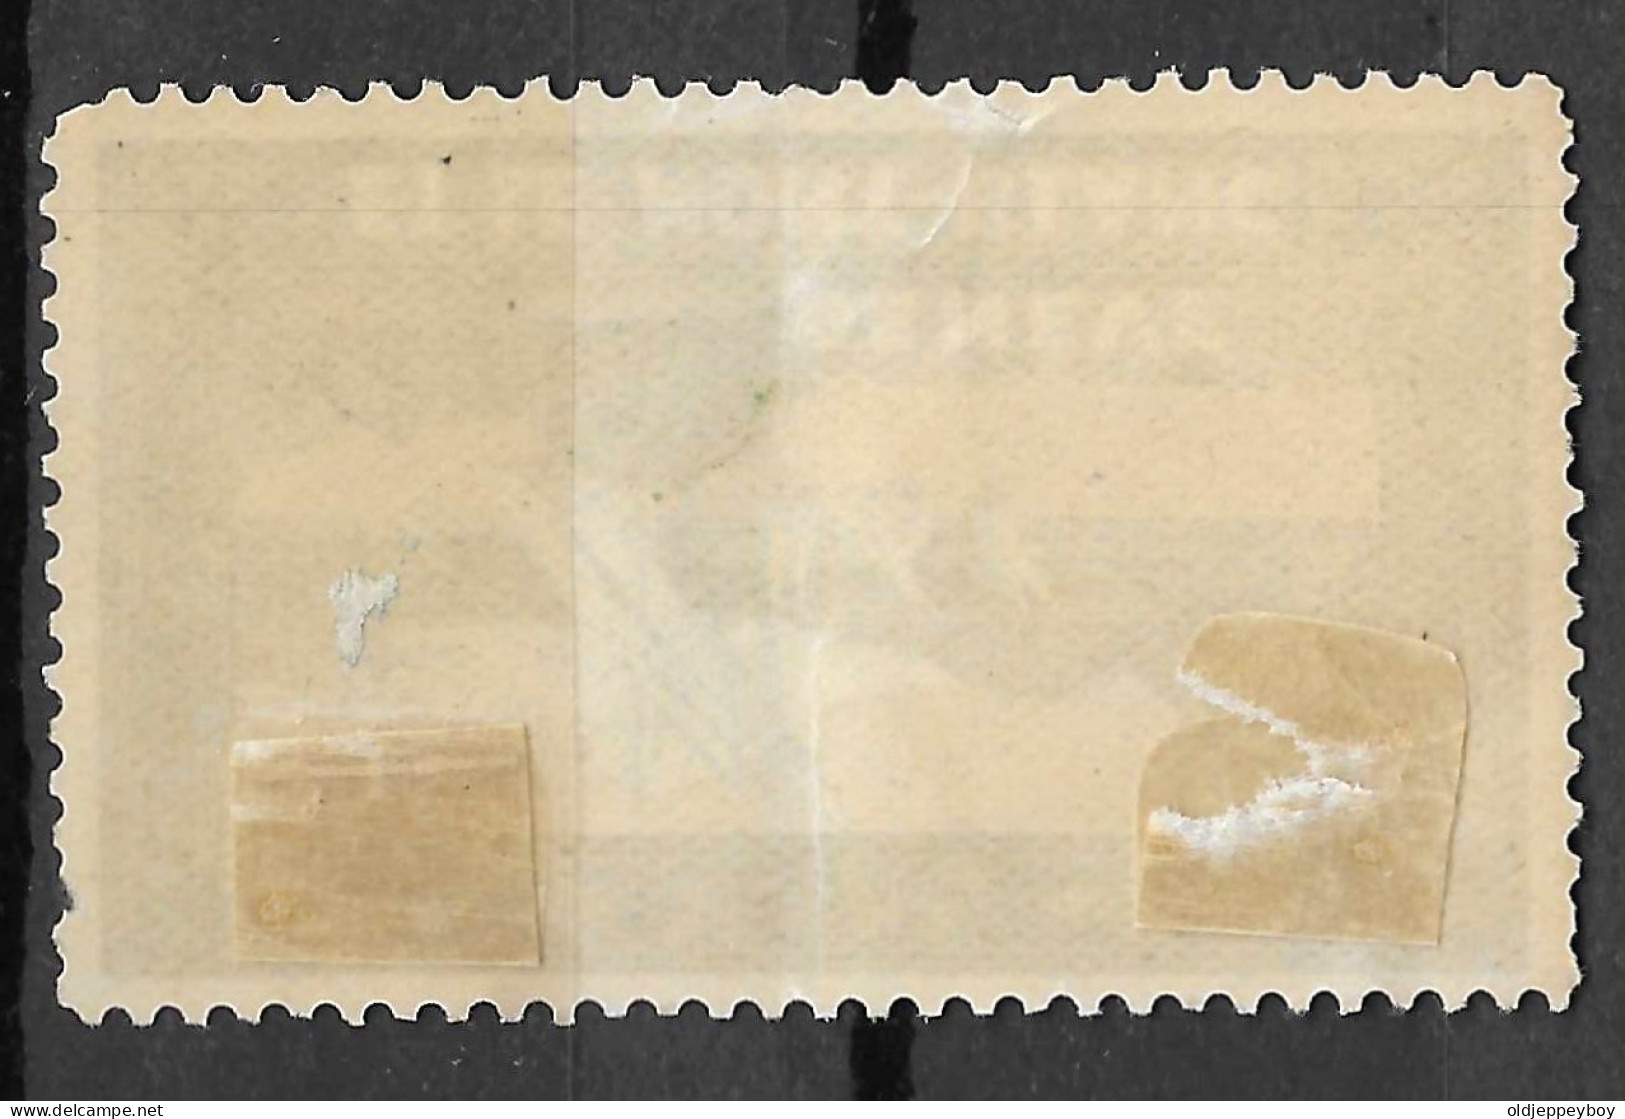 WWI WW1 Vignette Cinderella GENEVE Et Le MONT-BLANC Mountain Montagne Vignette Poster Stamp Label Switzerland Suisse - Cinderellas